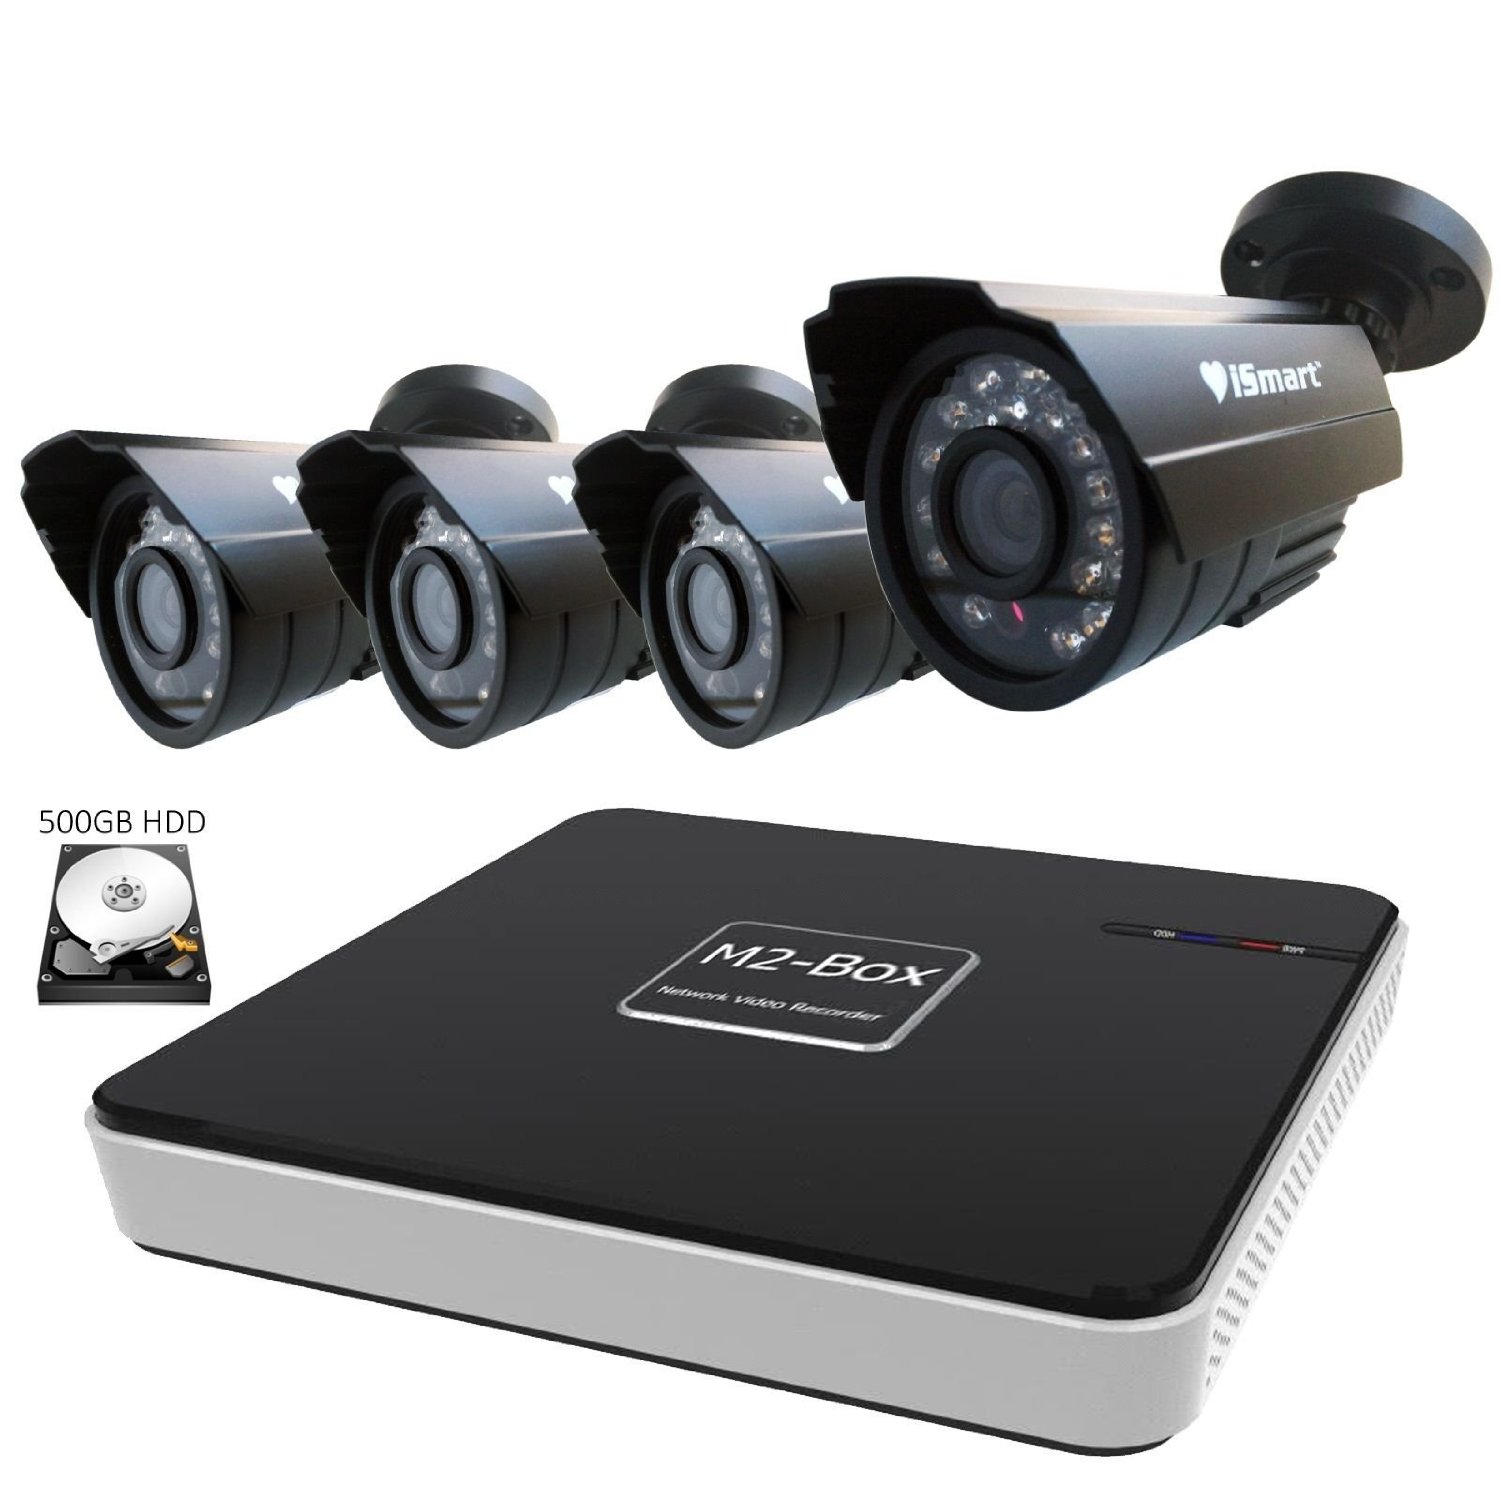 iSmart 8 Channel H.264 CCTV Security Surveillance